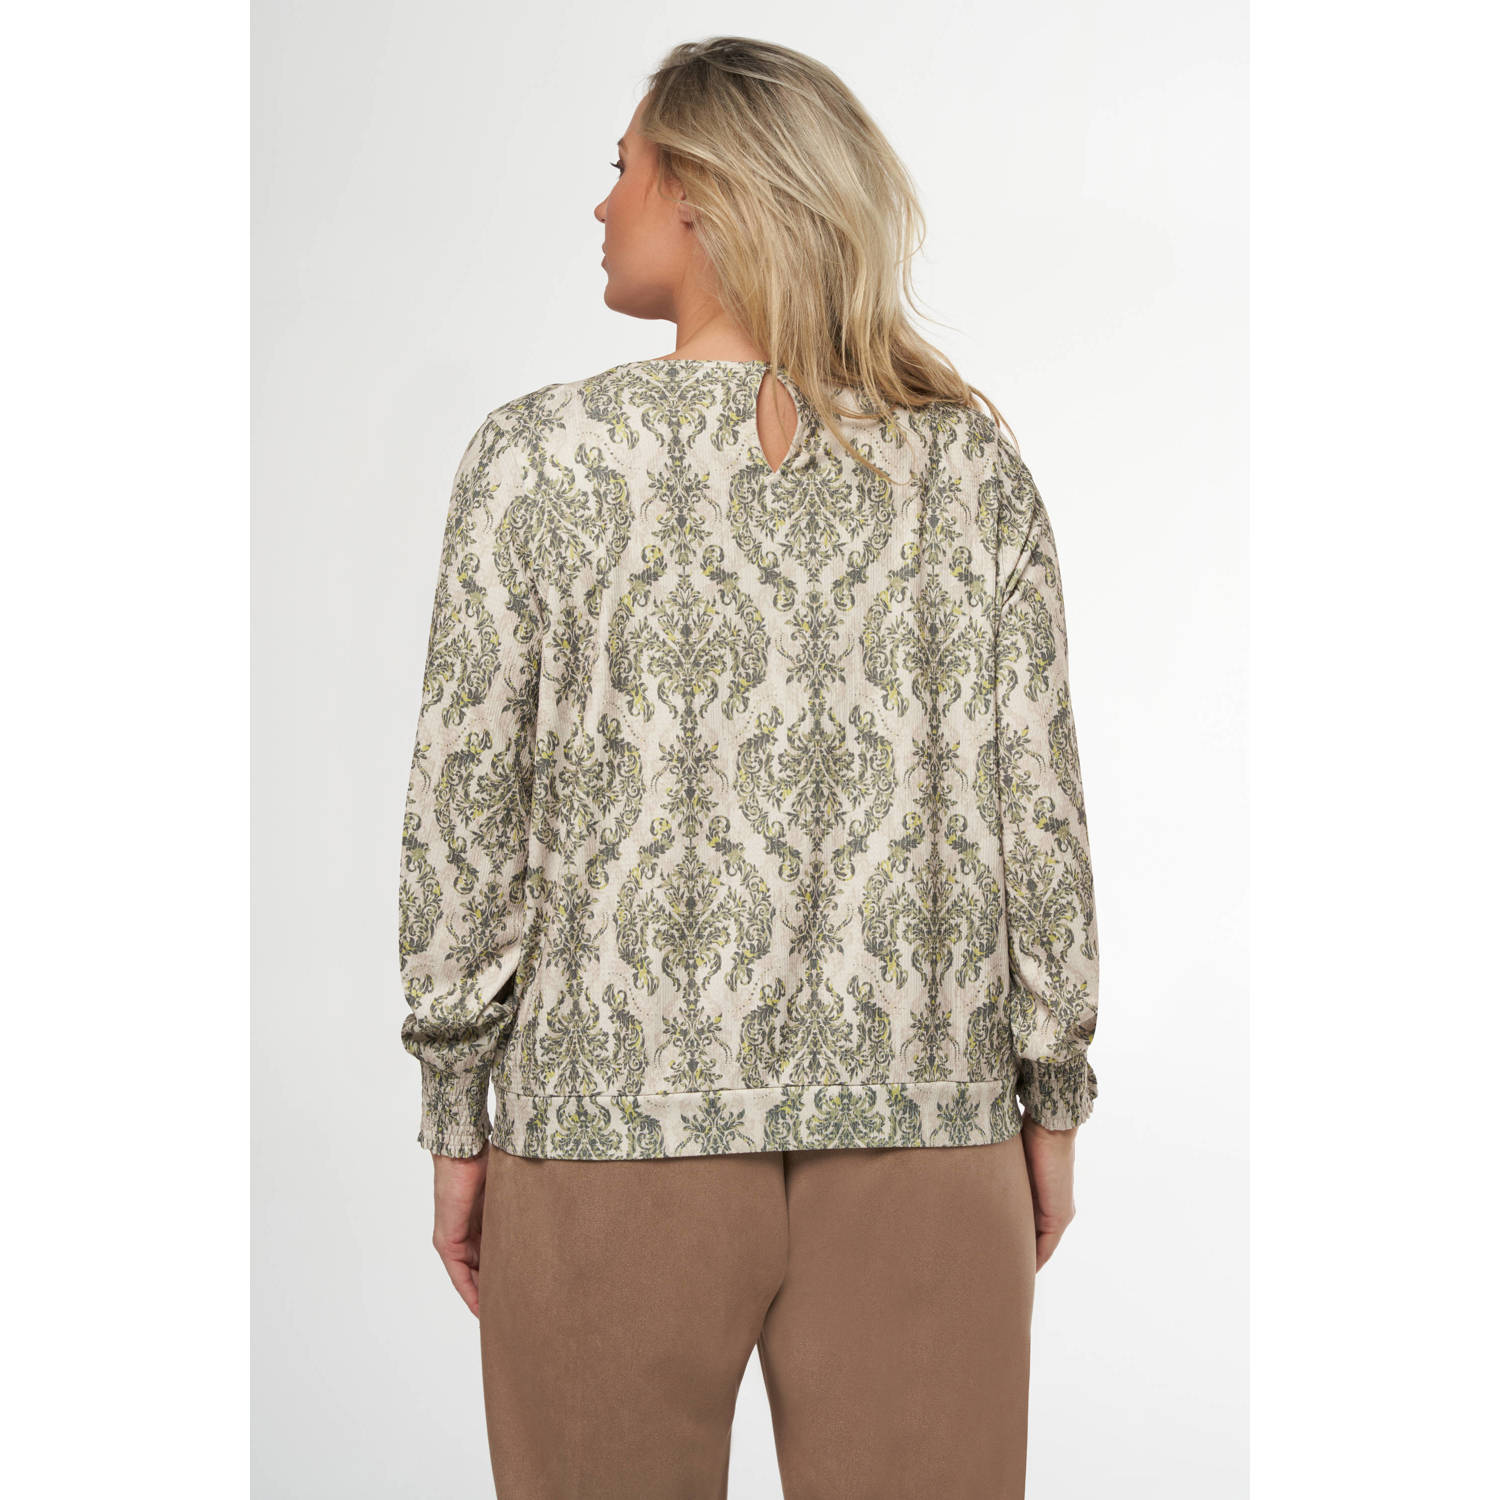 MS Mode blousetop met paisleyprint groen limegroen beige